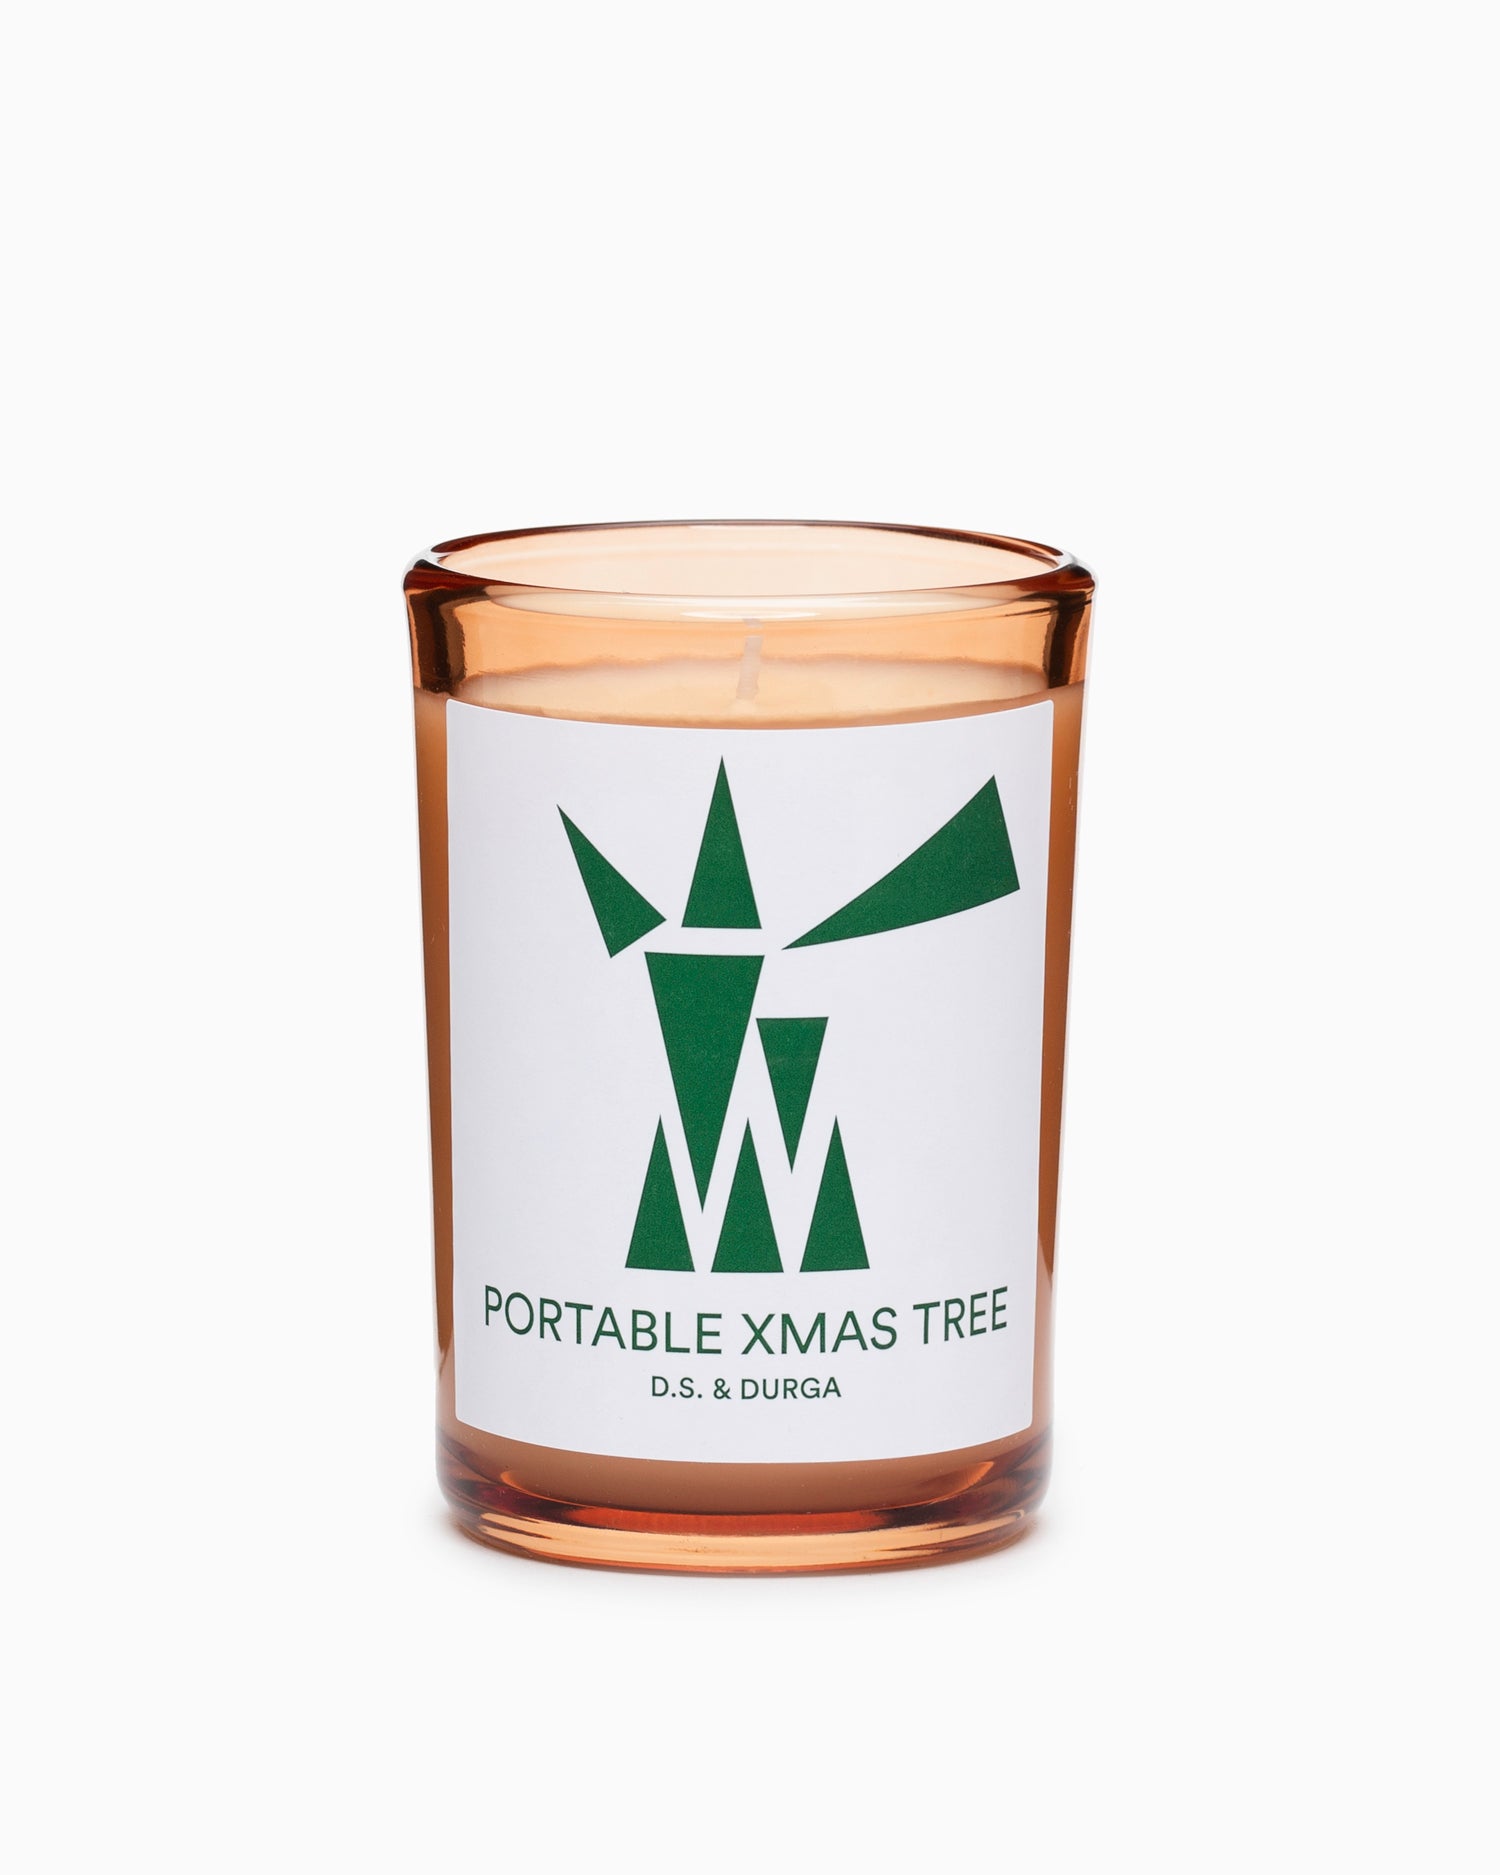 Portable Xmas Tree Candle - D.S. & Durga